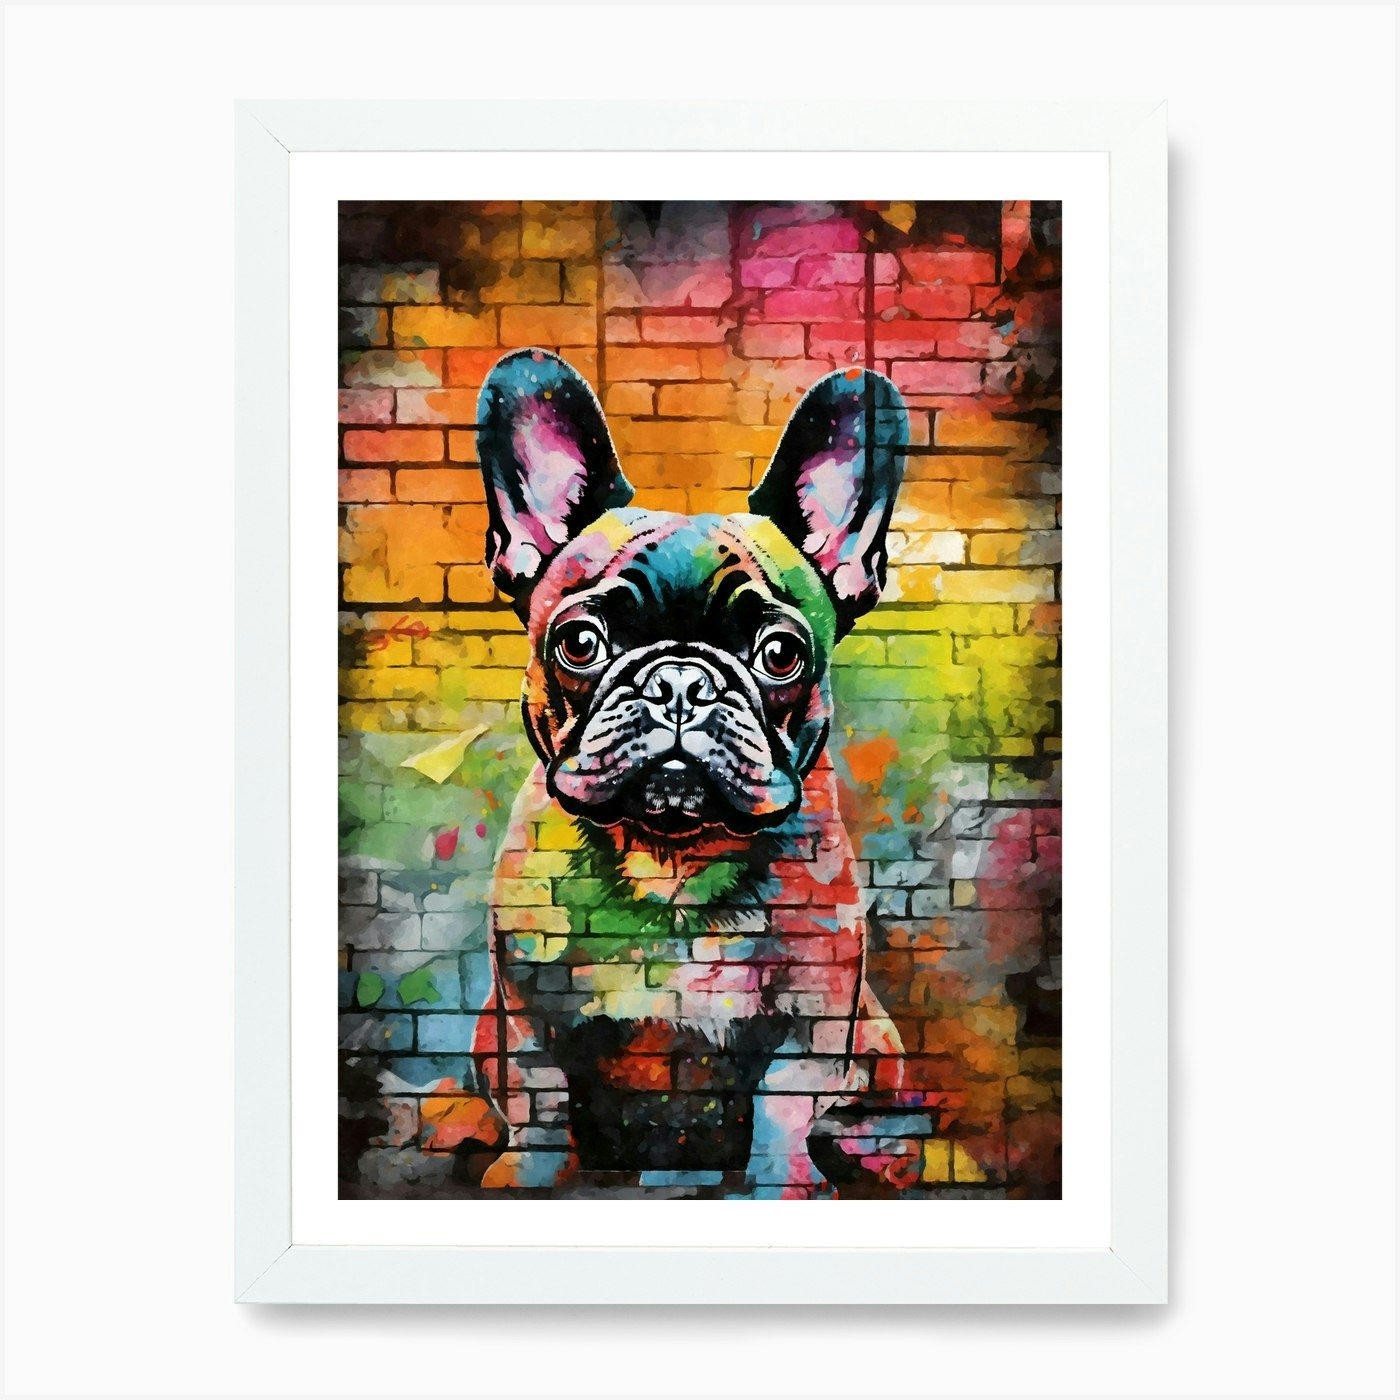 Aesthetic French Bulldog Dog Puppy Brick Wall Graffiti Artwork Art Print